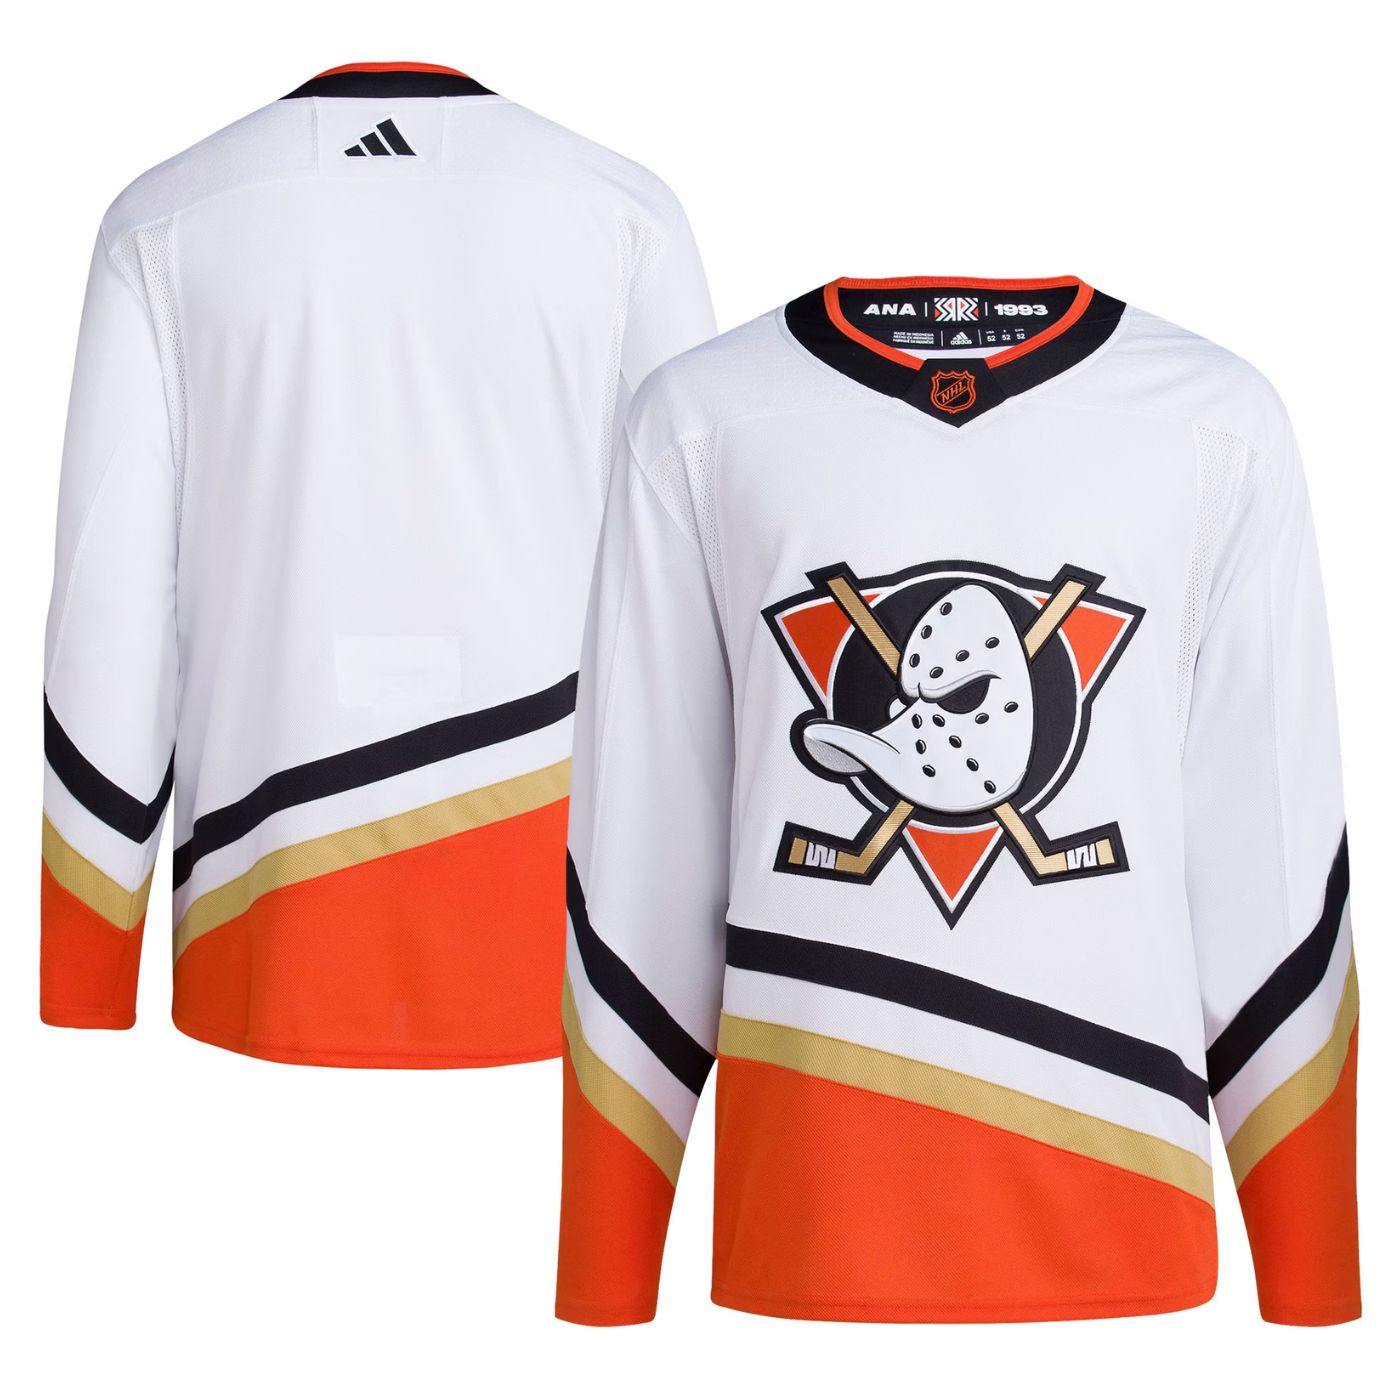 Anaheim Ducks 2021 Reverse Retro - The (unofficial) NHL Uniform